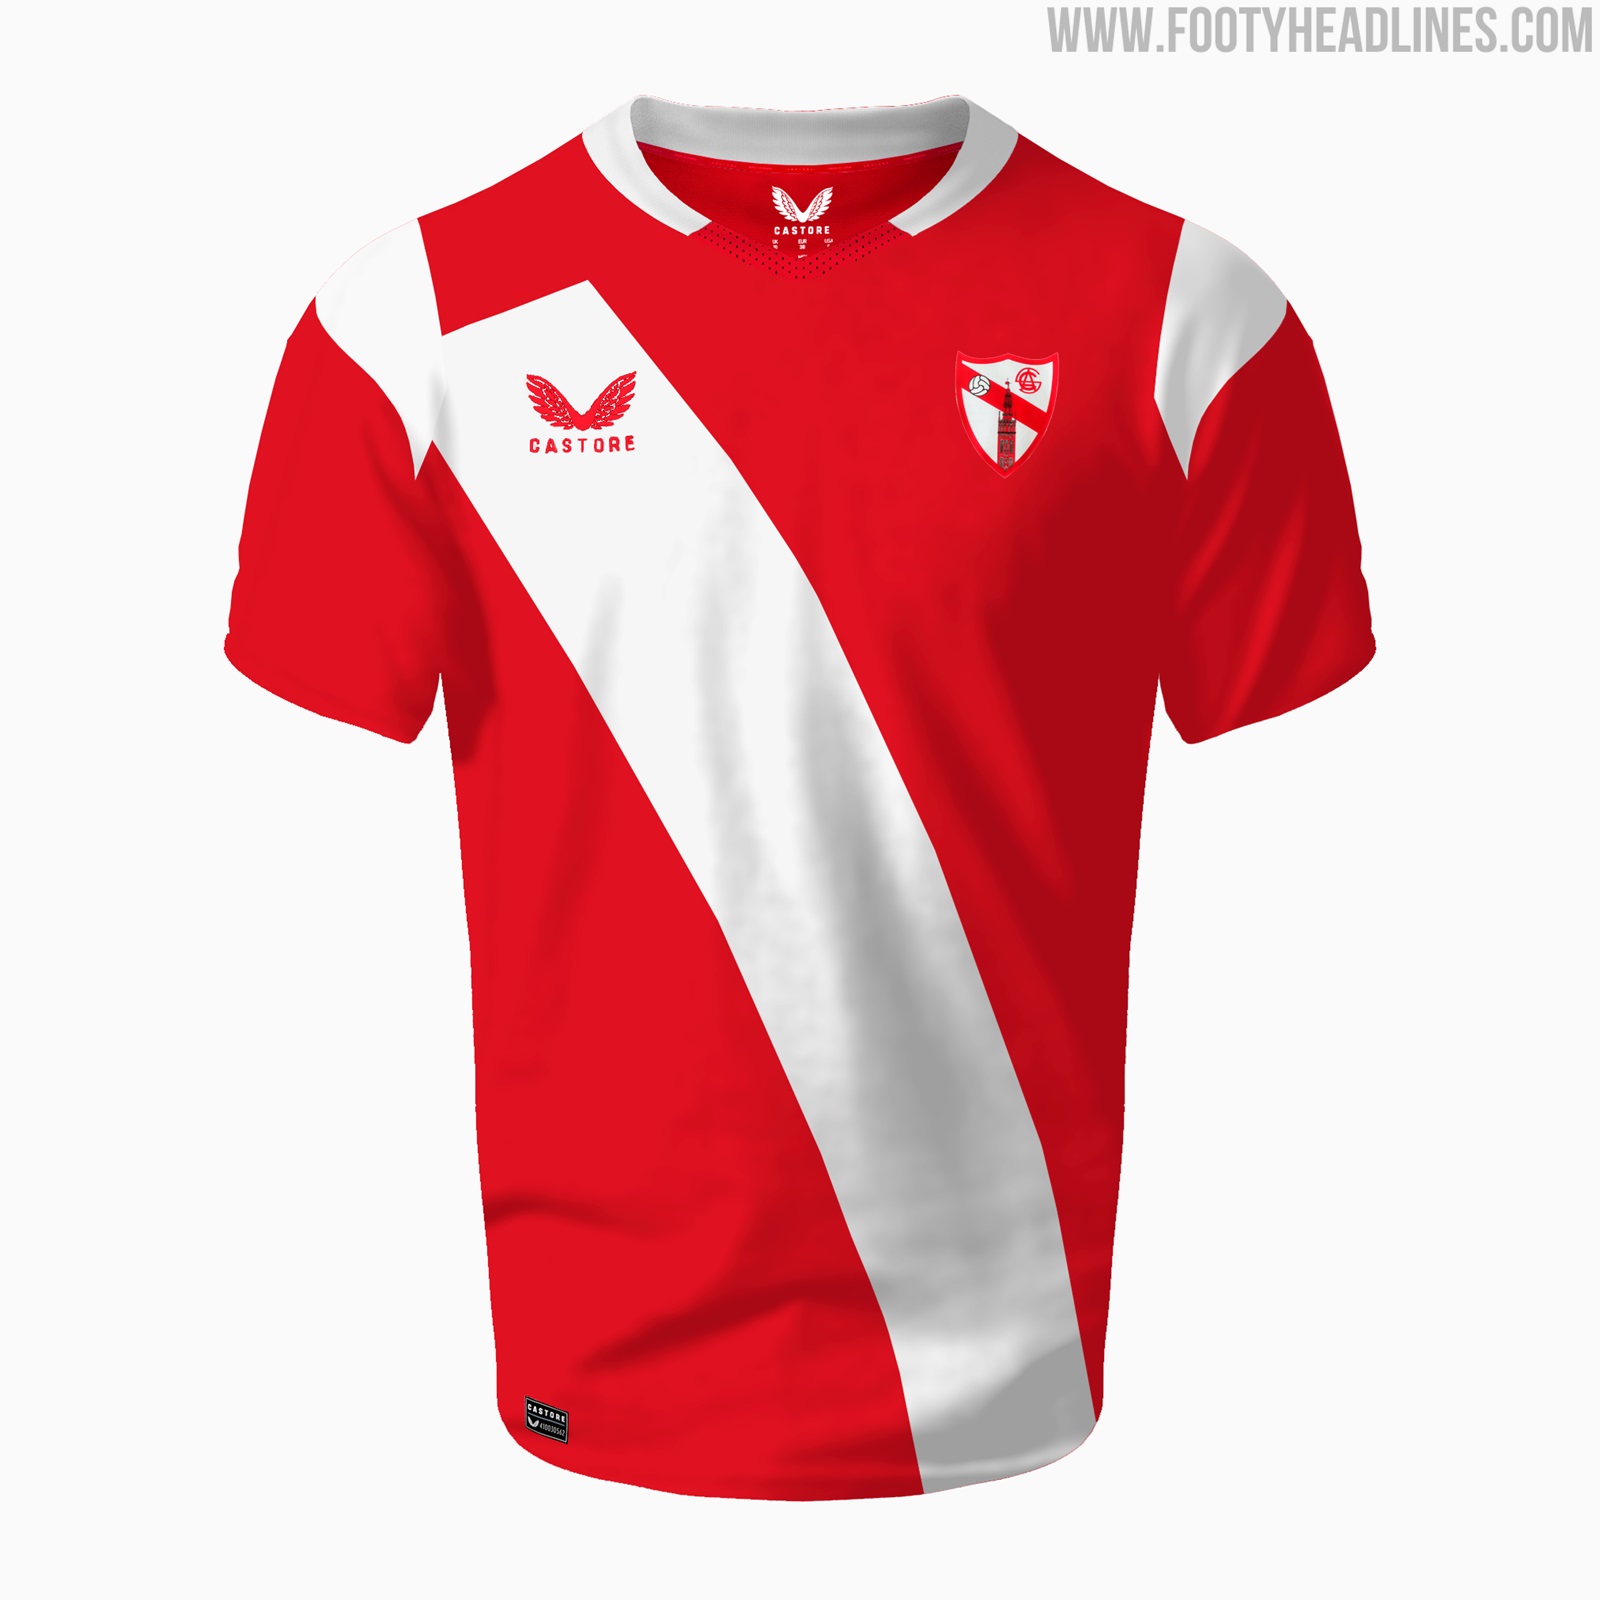 Zapatillero rojo con asa Colección Sevilla FC 23/24